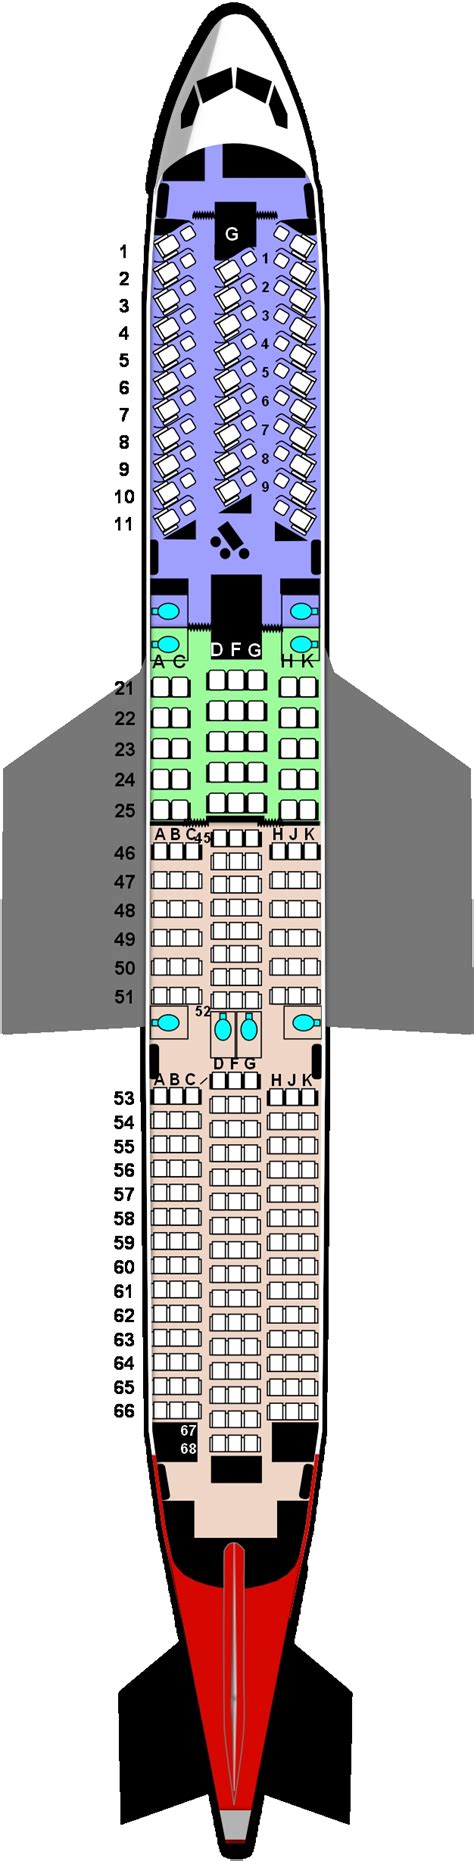 United Boeing Seat Map Sexiz Pix